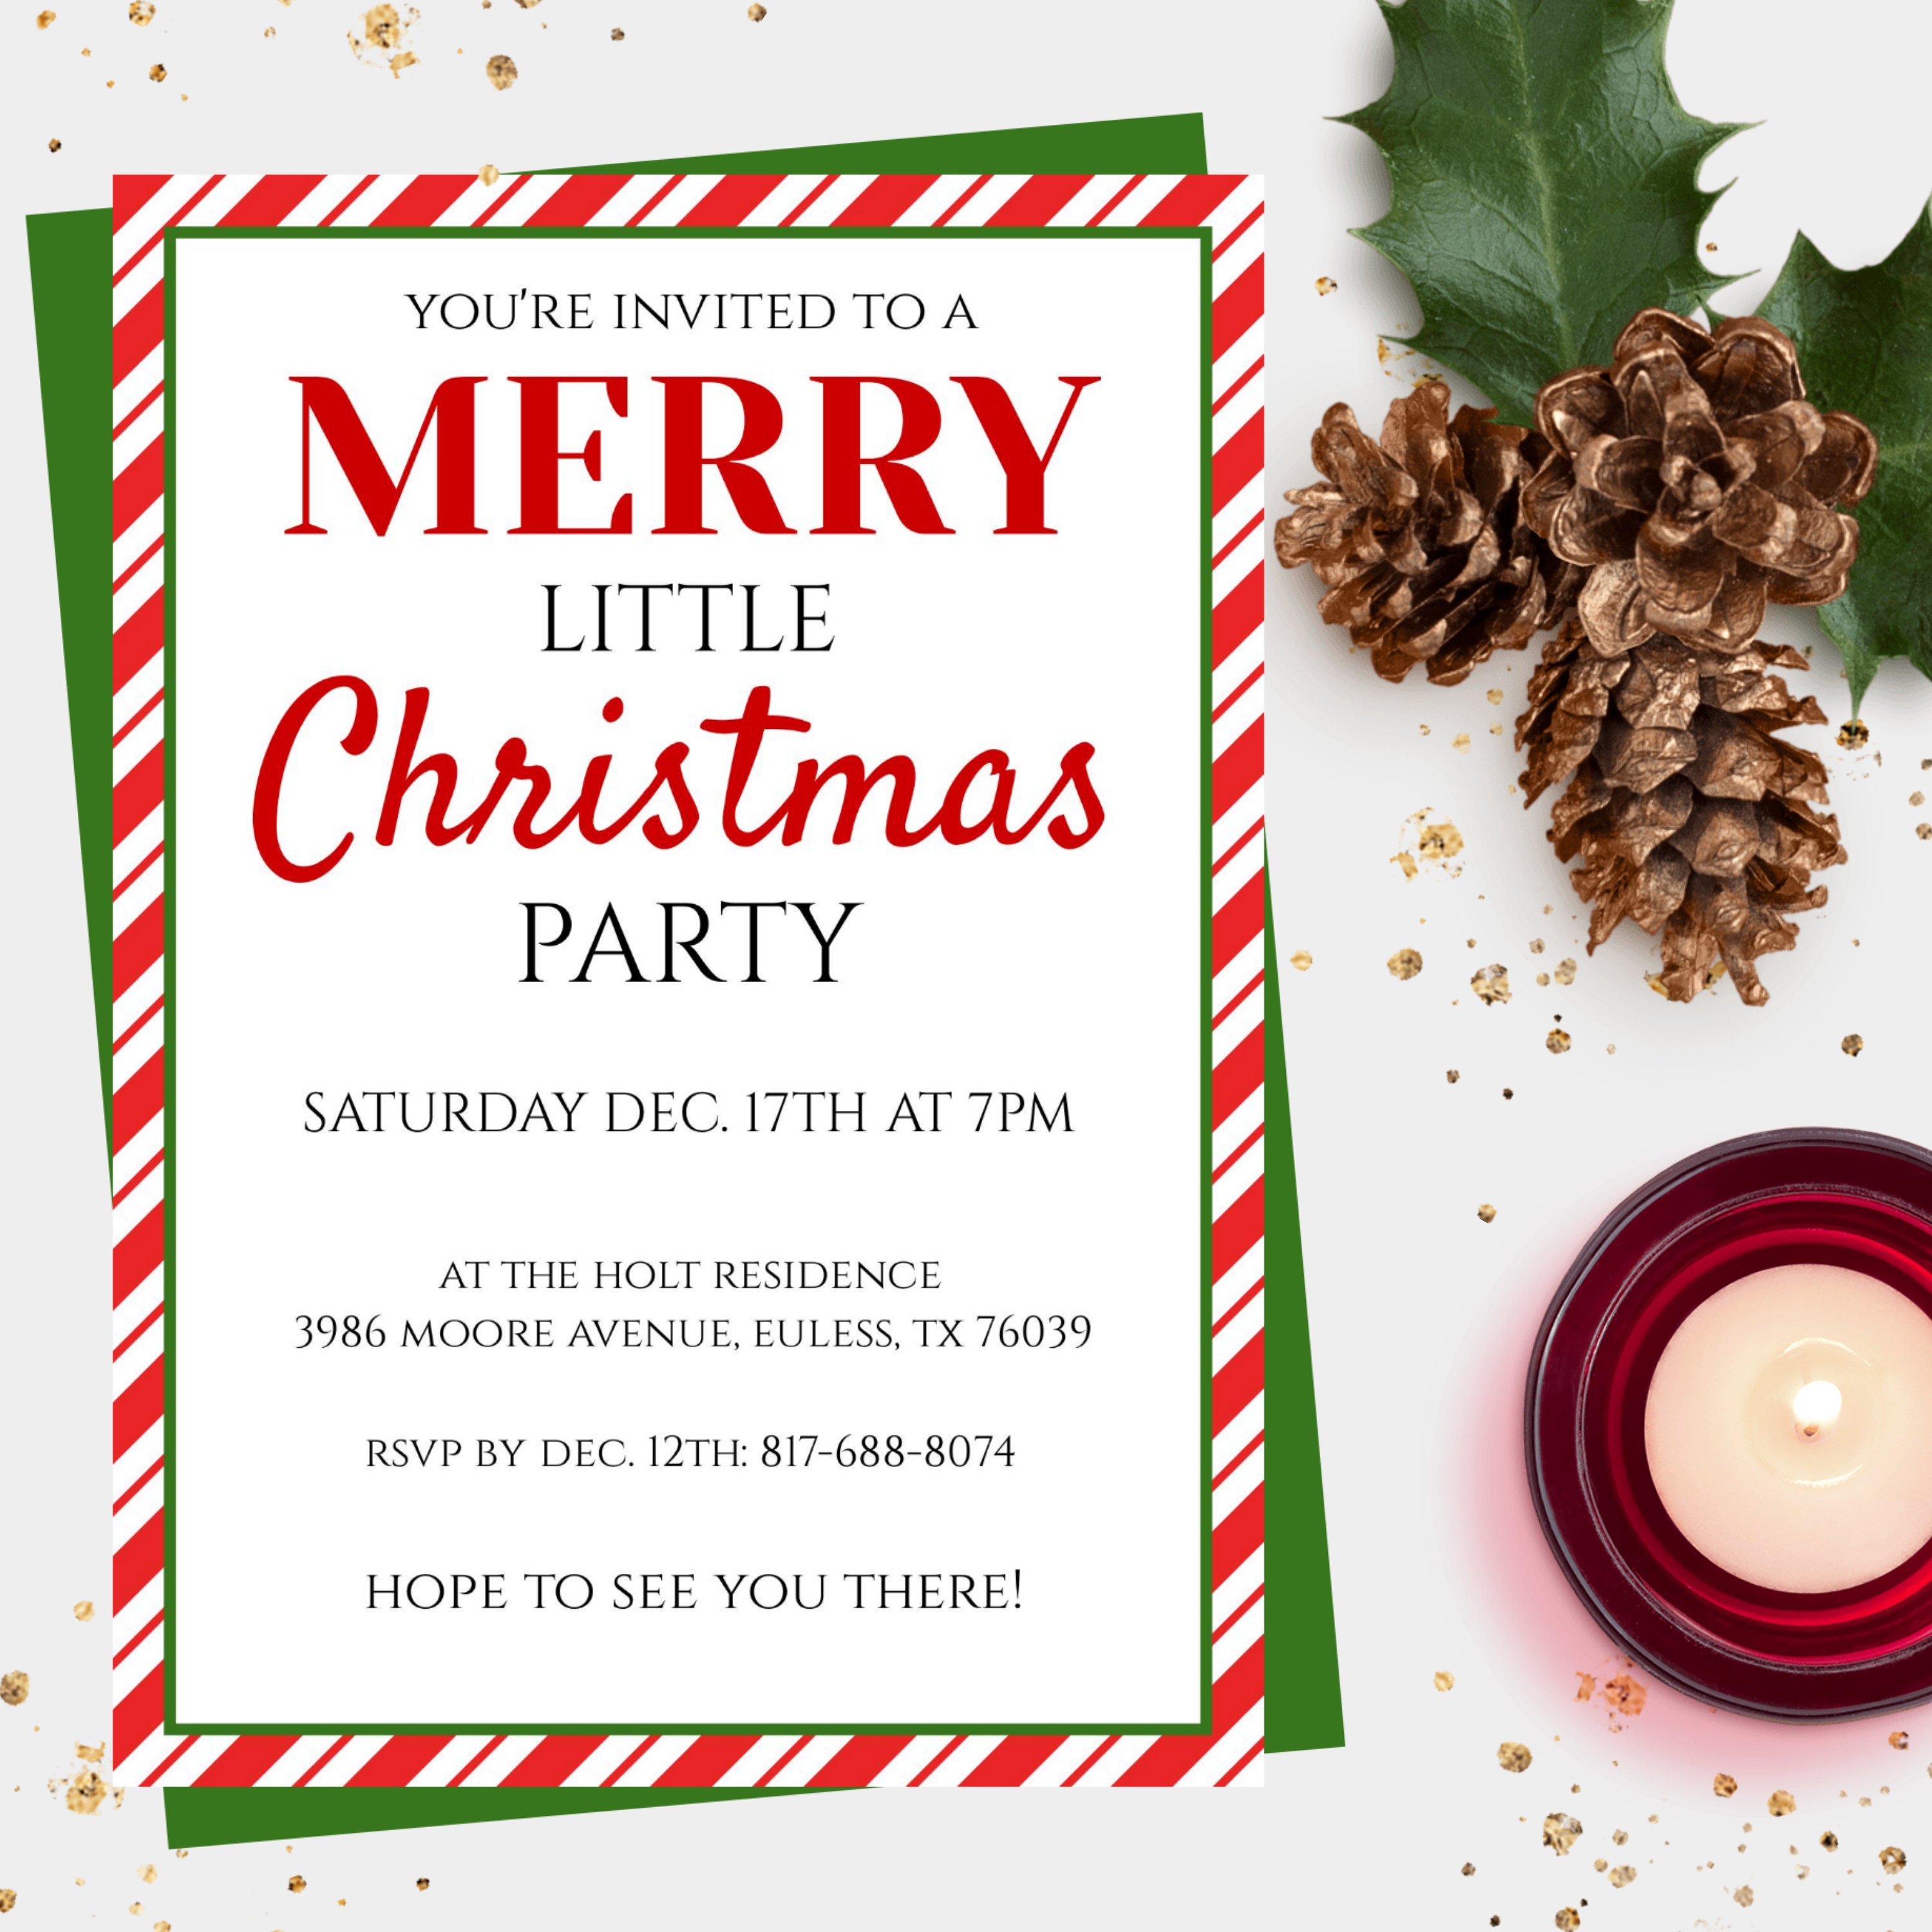 Xmas Party Invite Holiday Party Invitation Printable Christmas Invitations Merry and Bright